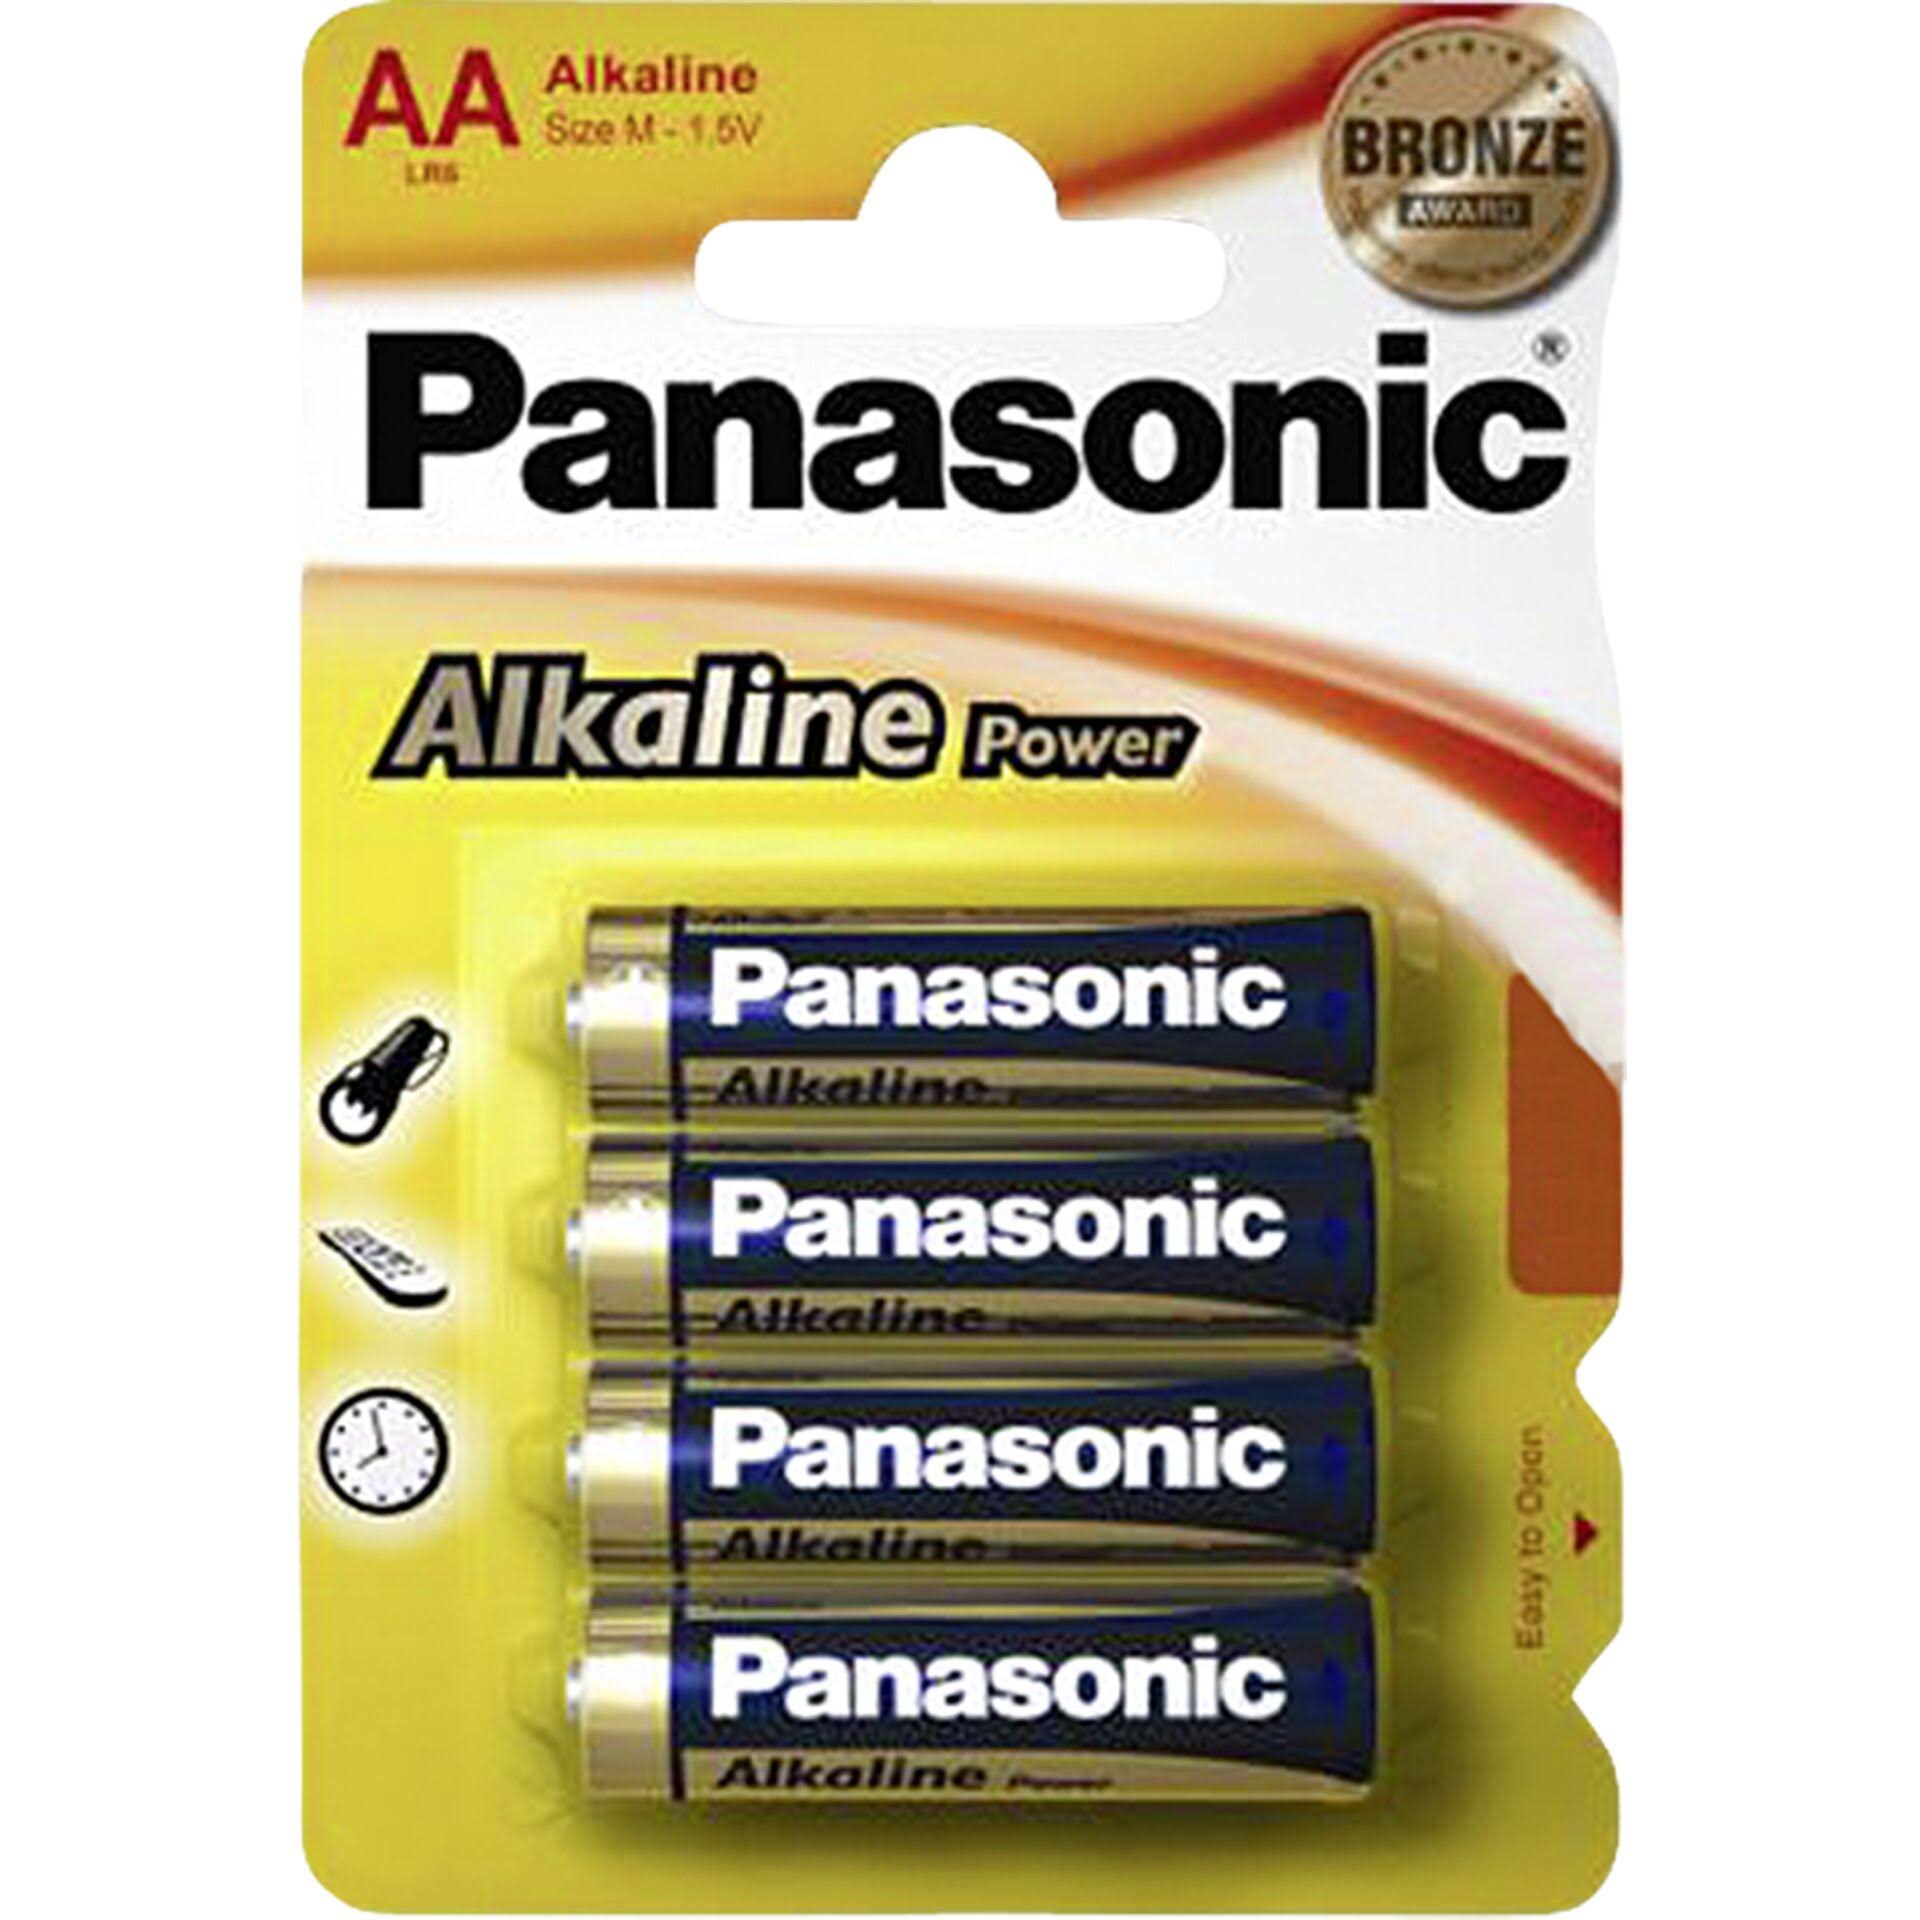 Panasonic Alkaline Power AA Batteries - 4pk